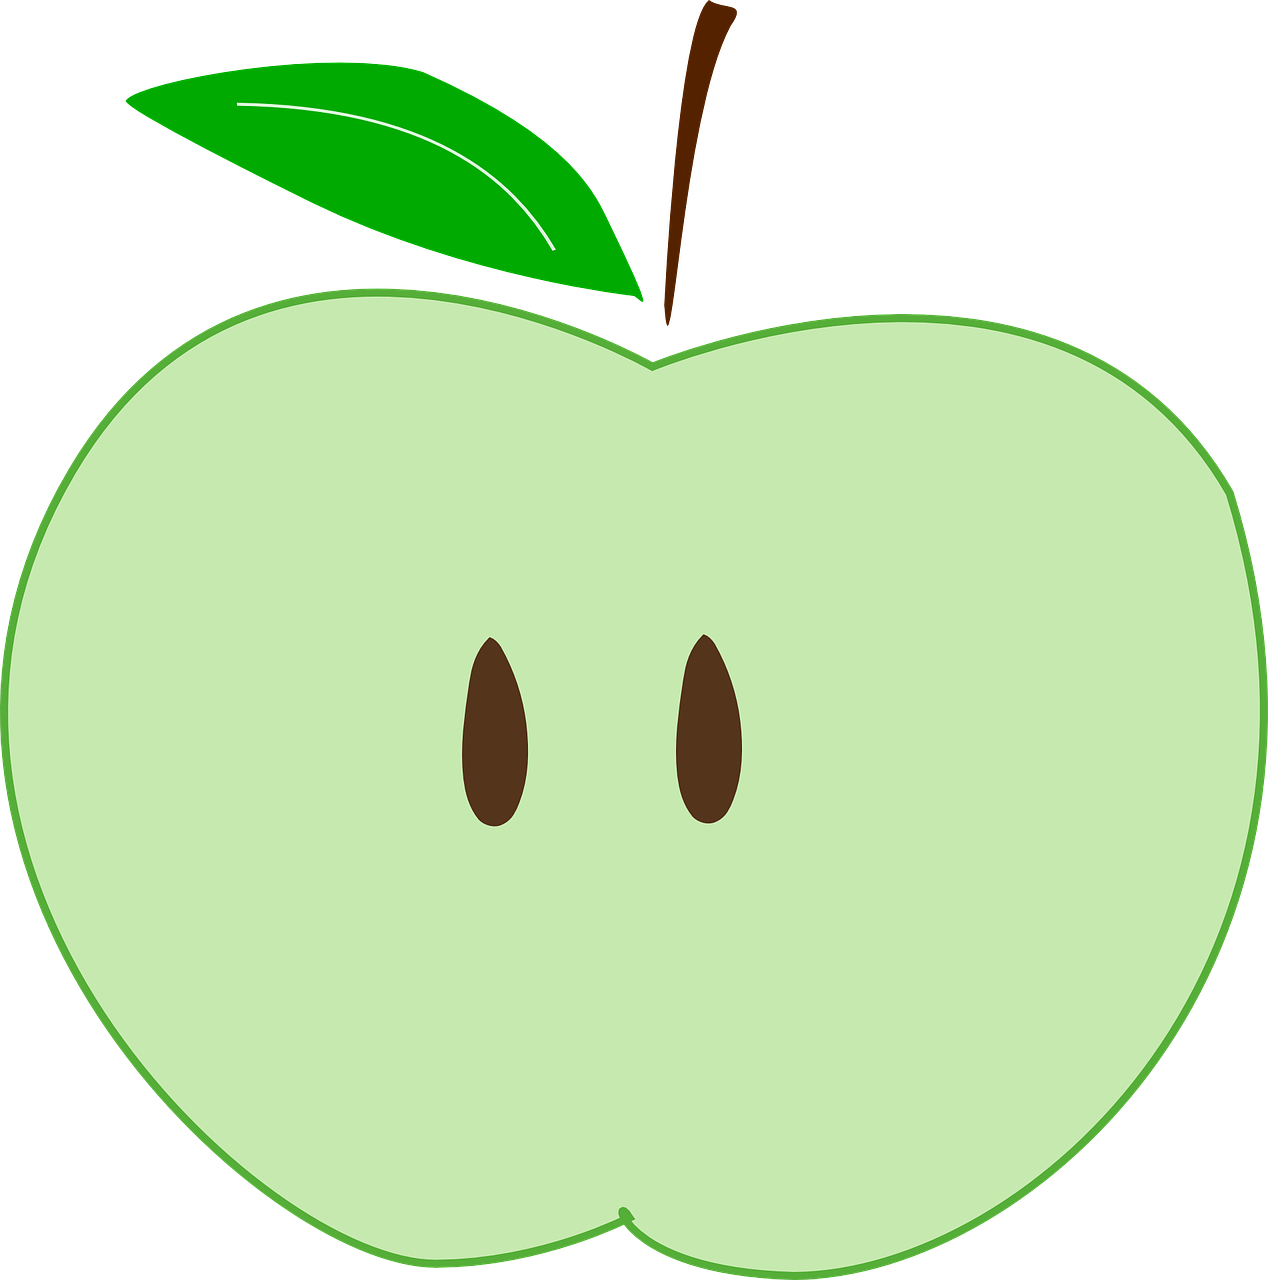 green apple slice free photo